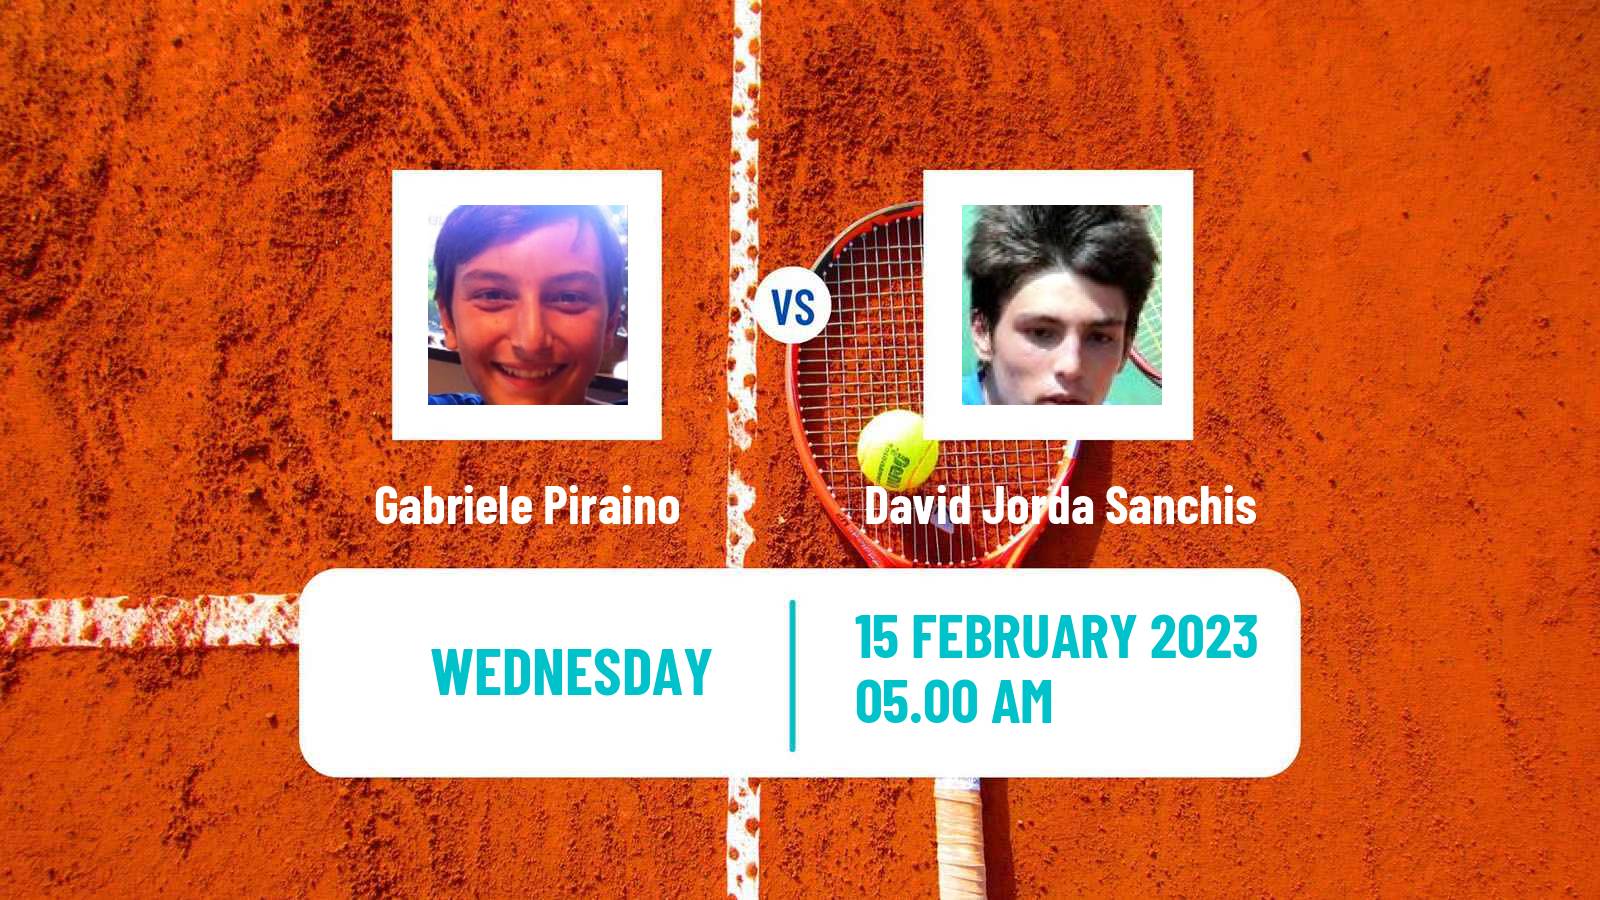 Tennis ITF Tournaments Gabriele Piraino - David Jorda Sanchis